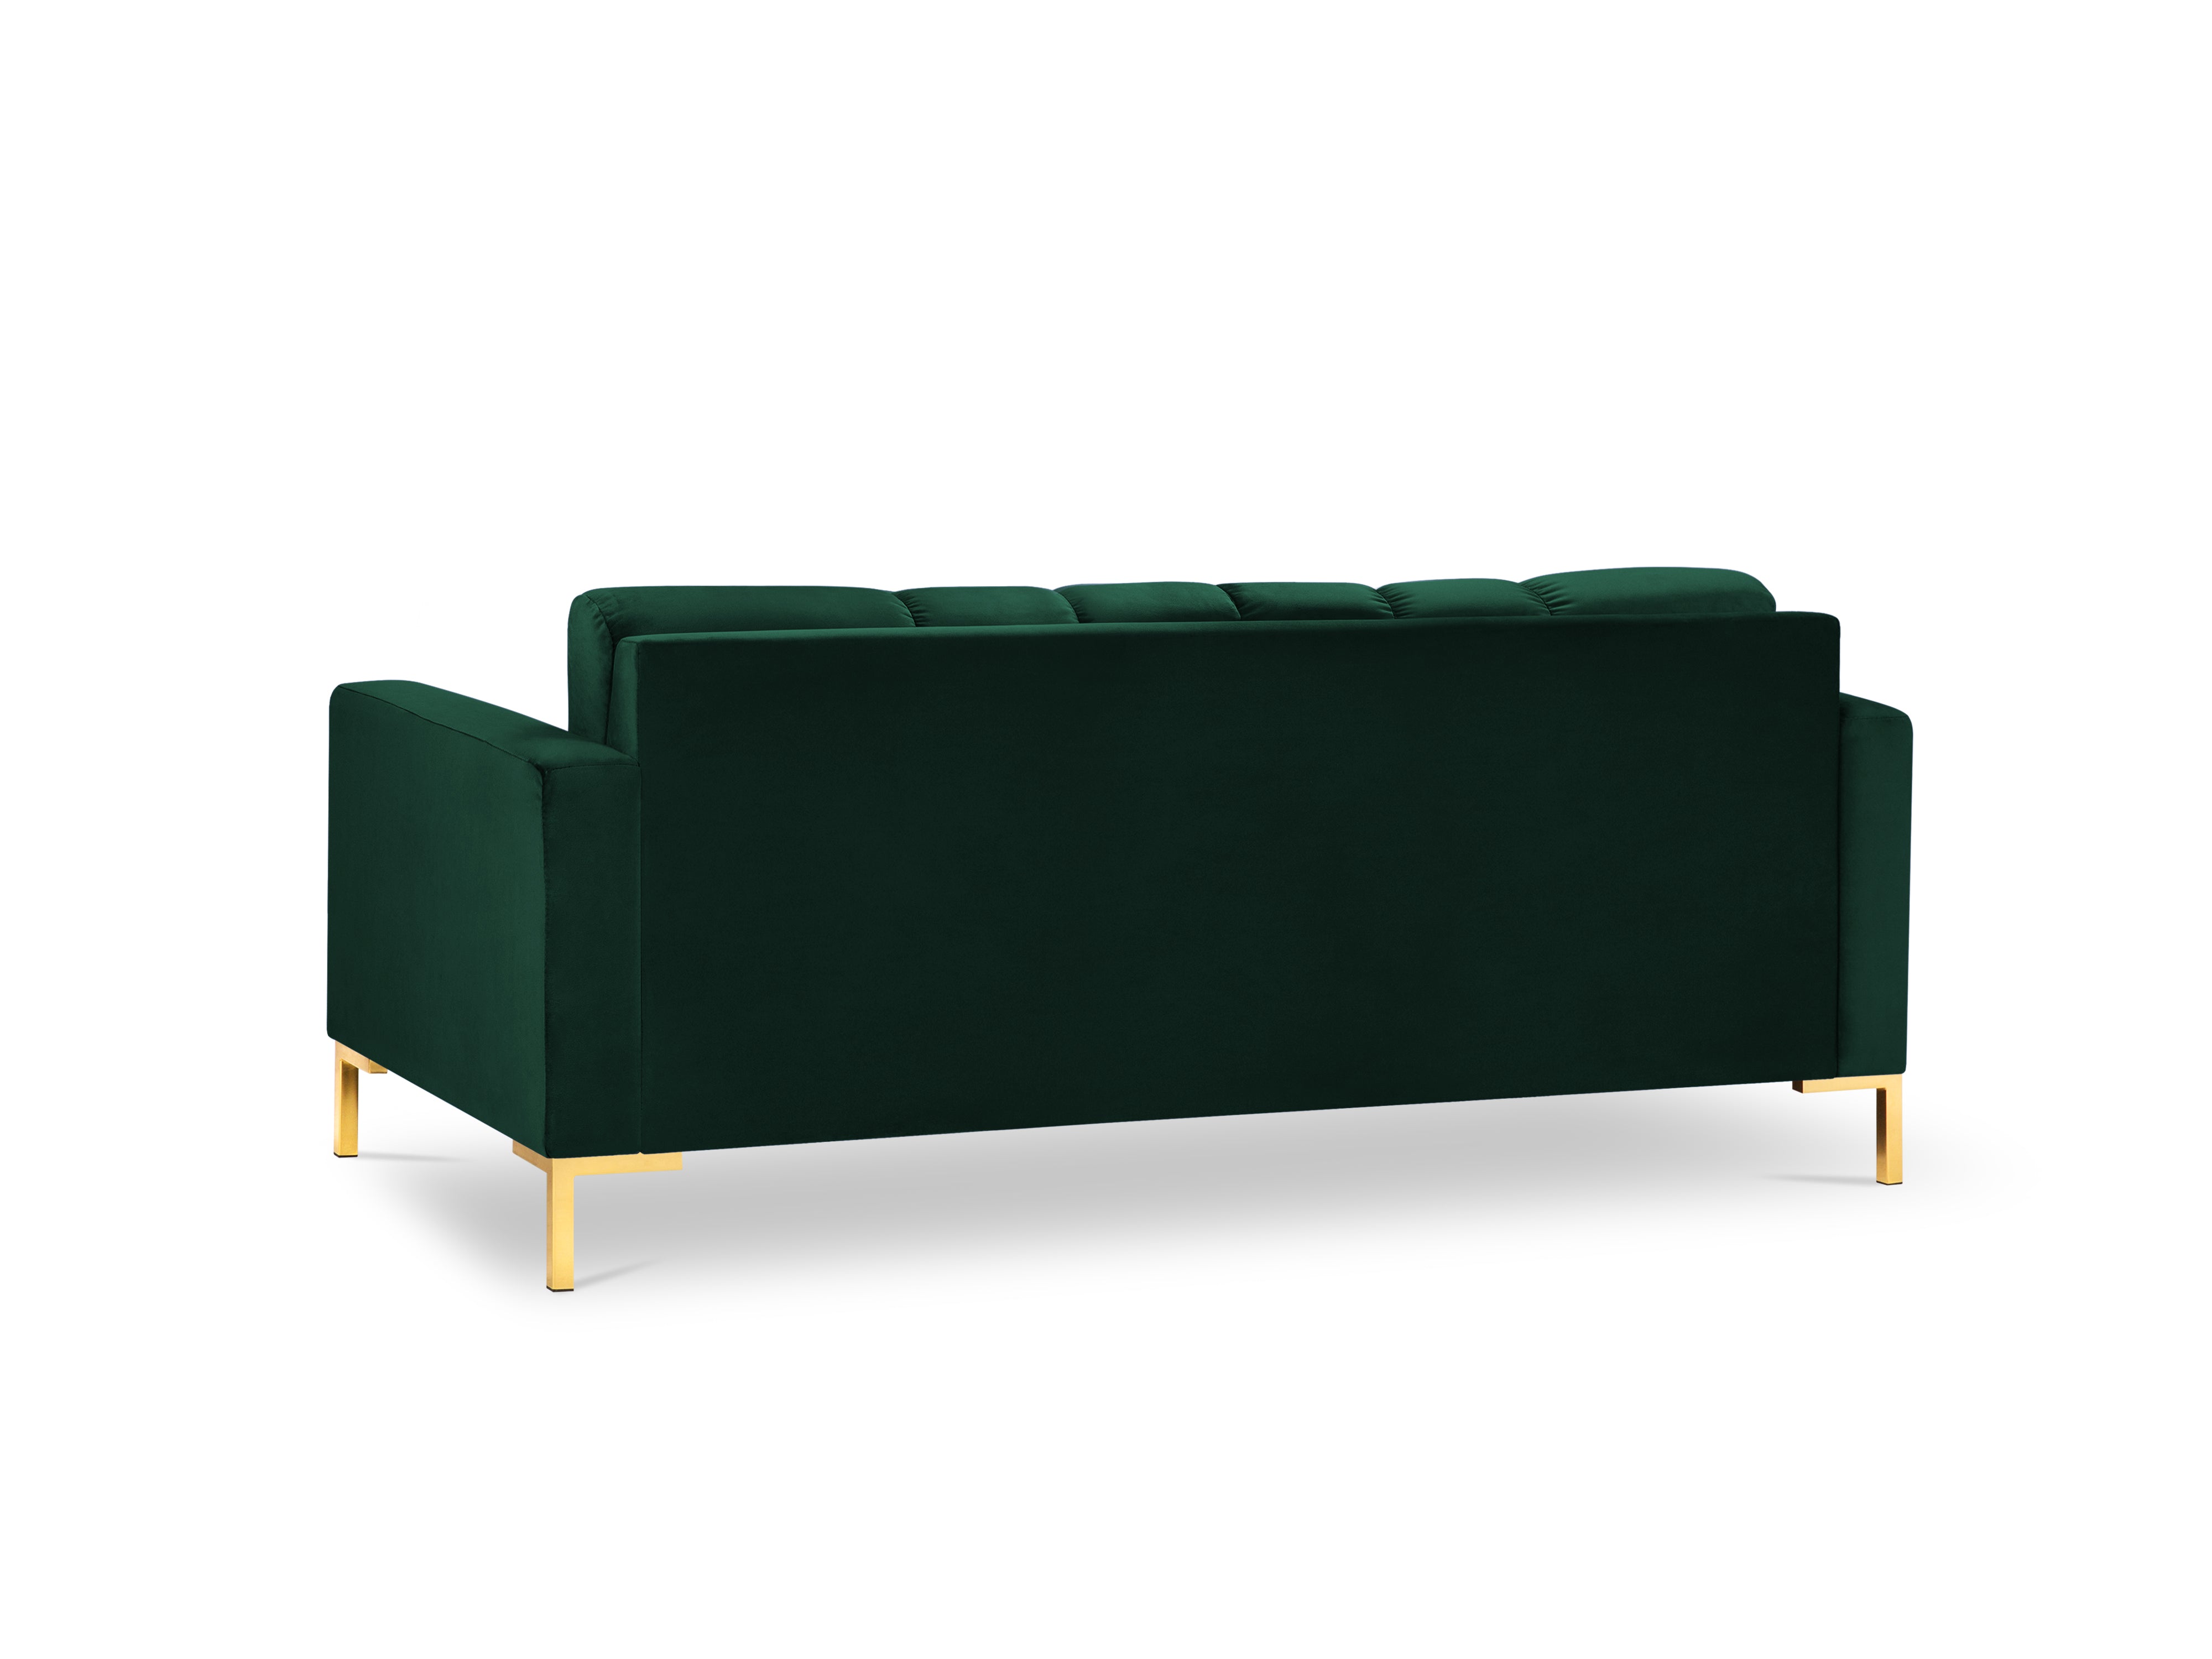 Green sofa with a golden base